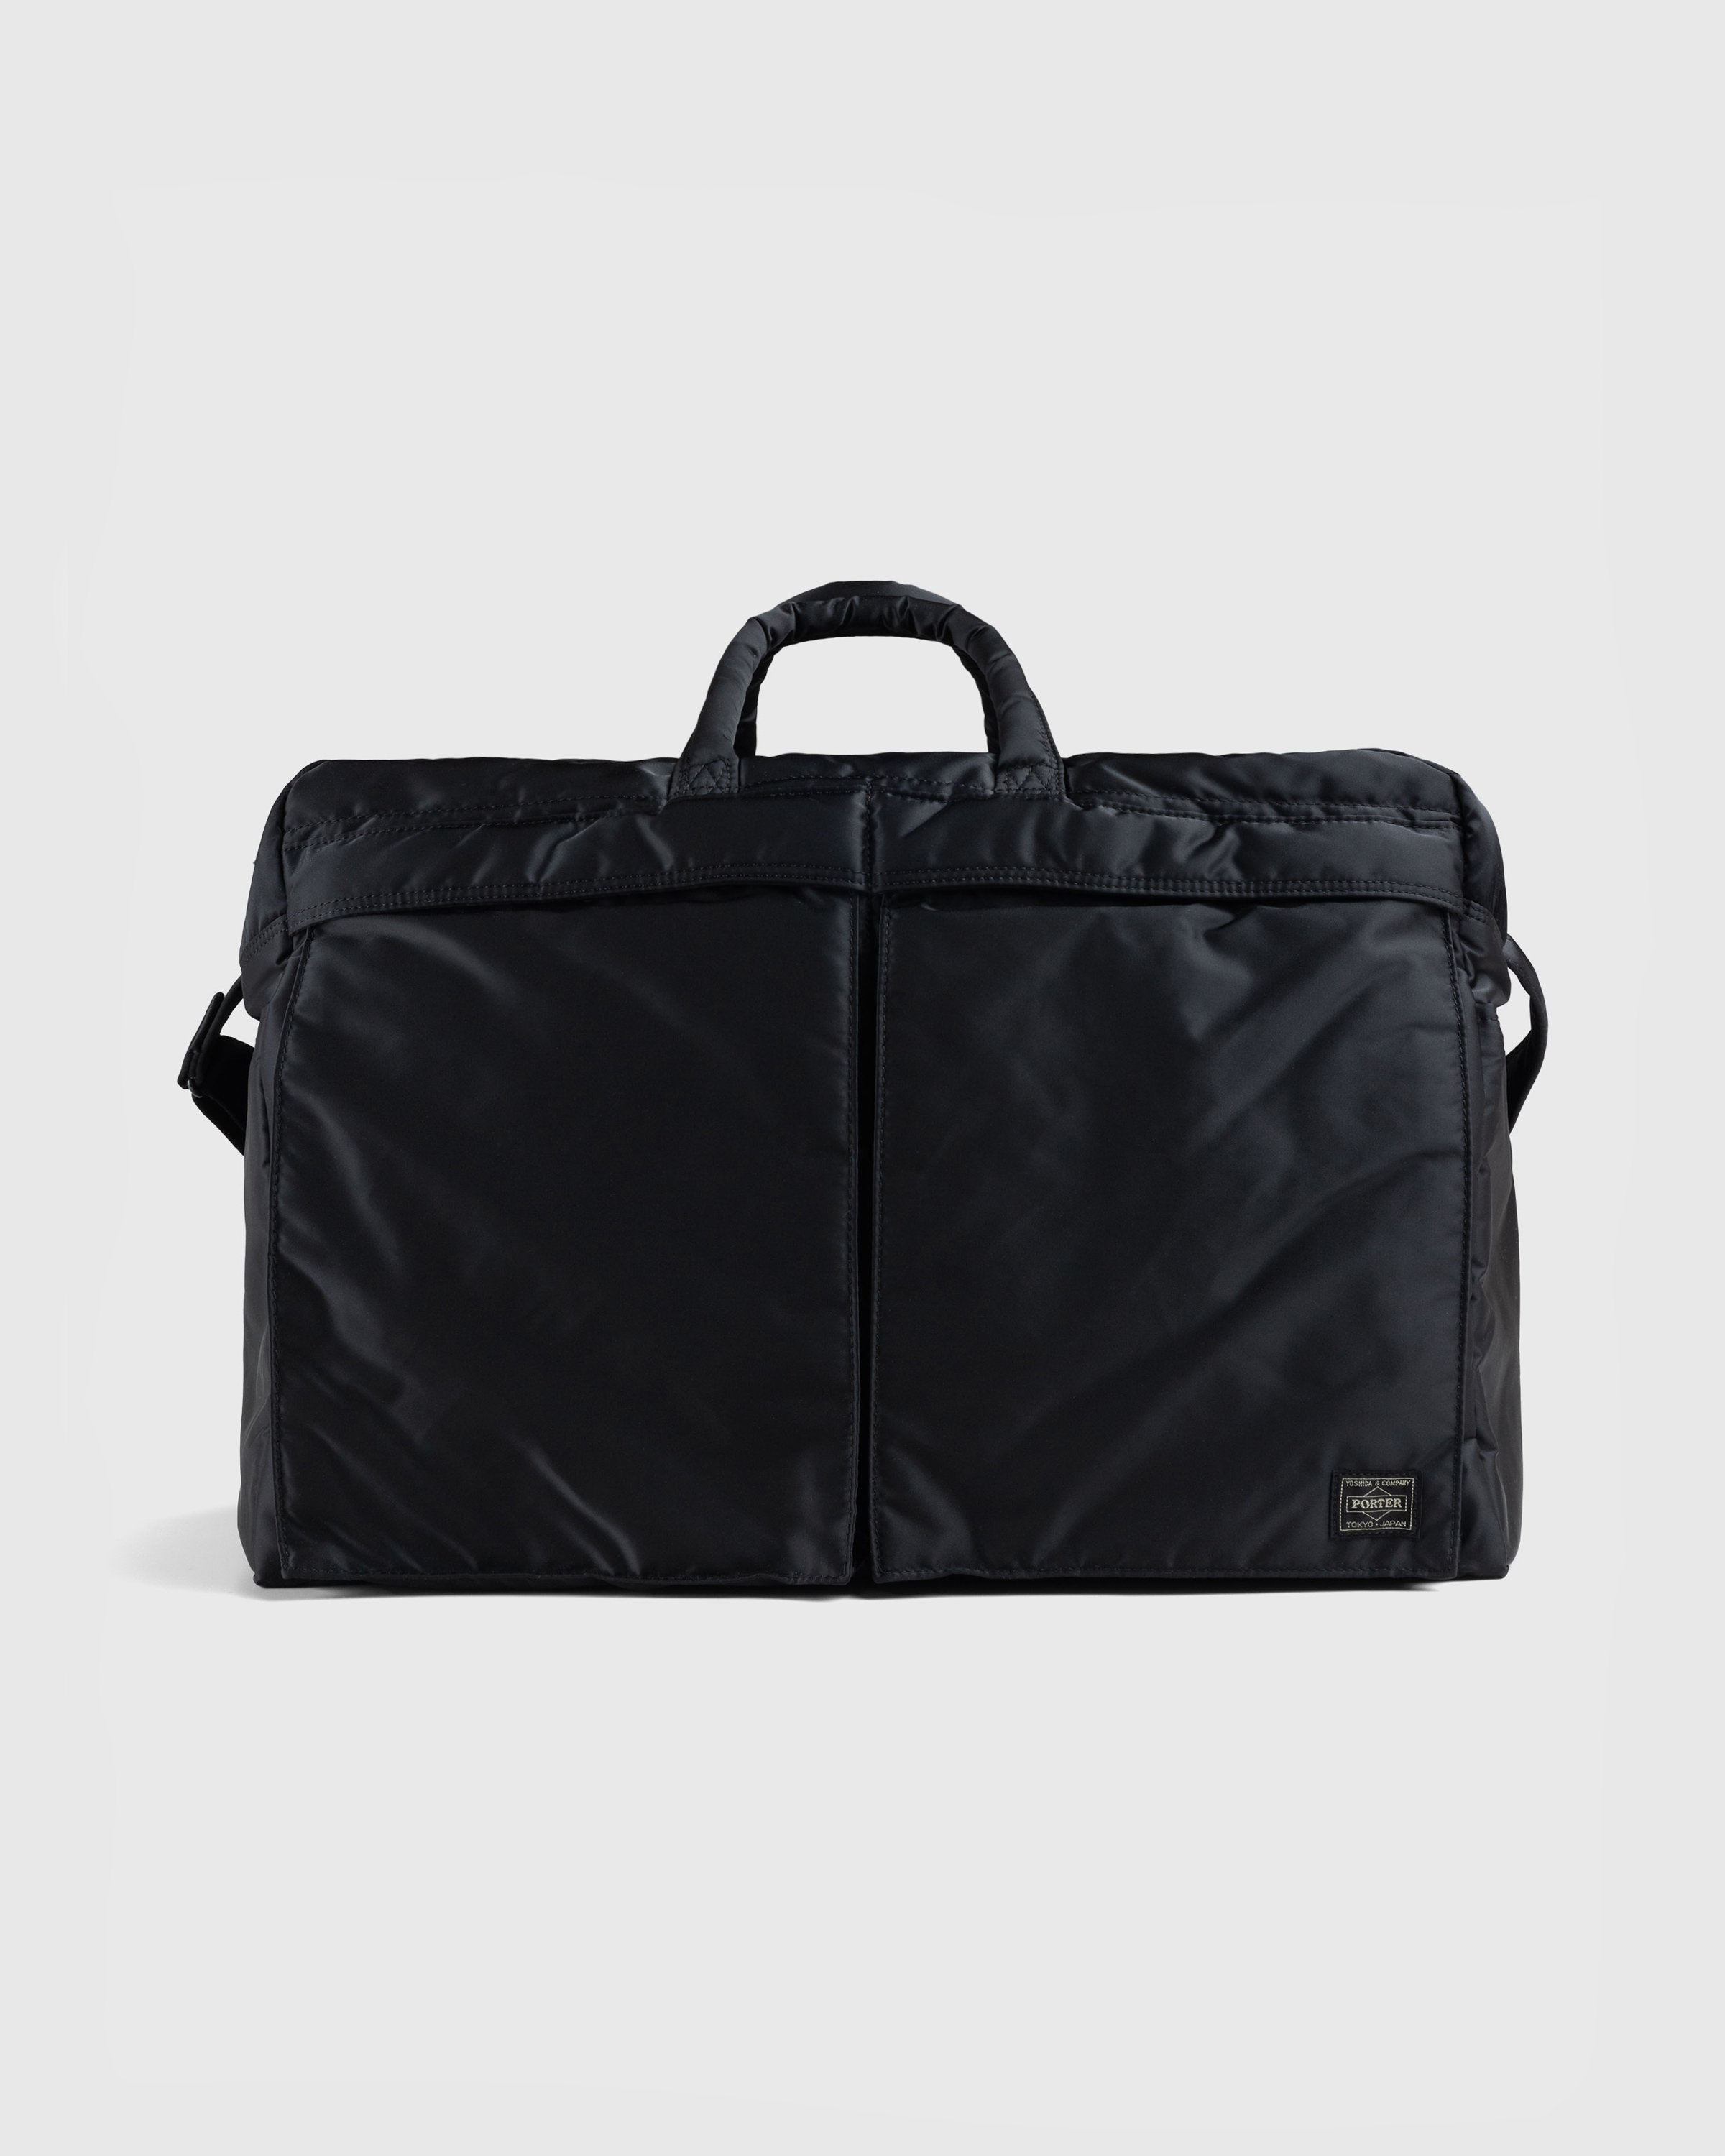 Porter-Yoshida & Co. - TANKER 2WAY DUFFLE BAG (S) - Accessories - Black - Image 1